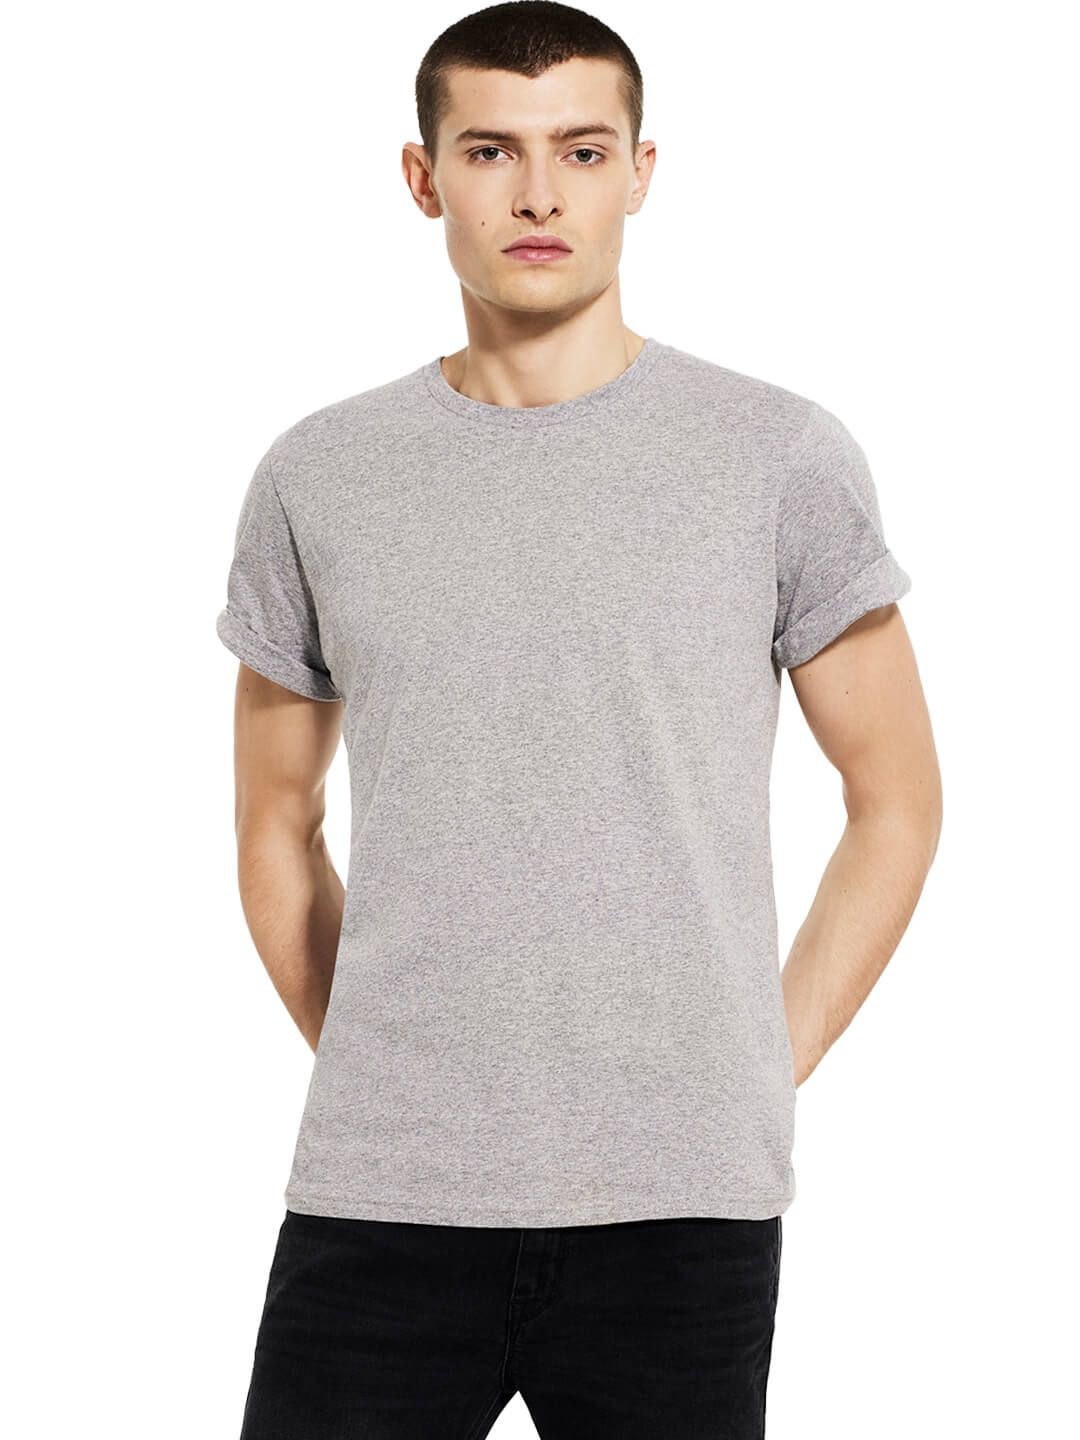 Camiseta 100% algodón orgánico hombre, moda sostenible